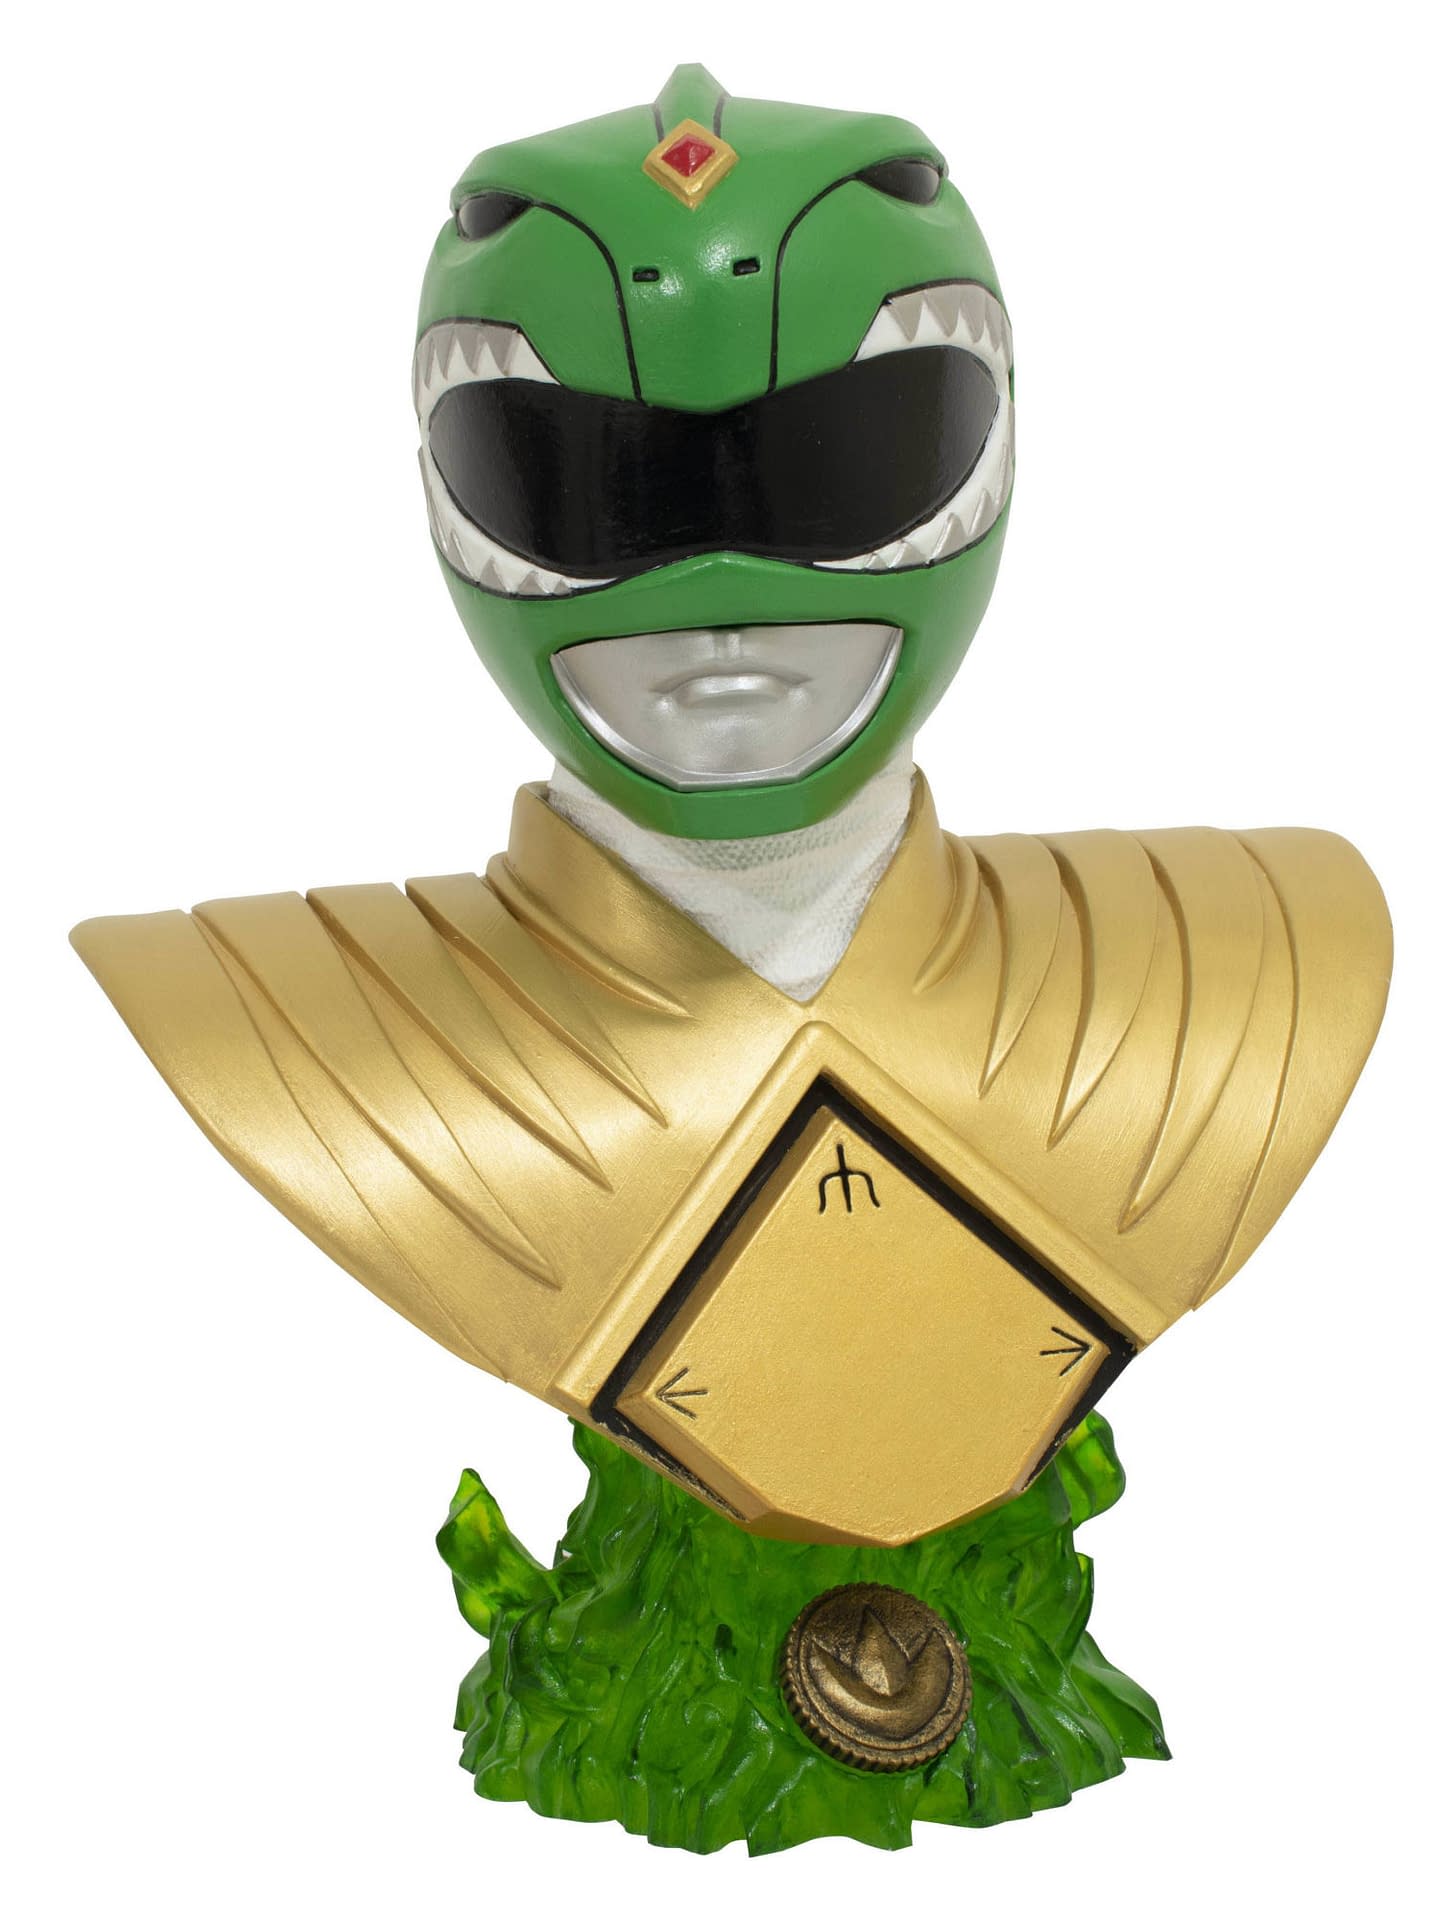 Power Rangers Green Rangers Gets Exclusive Bust from Gentle Giant 